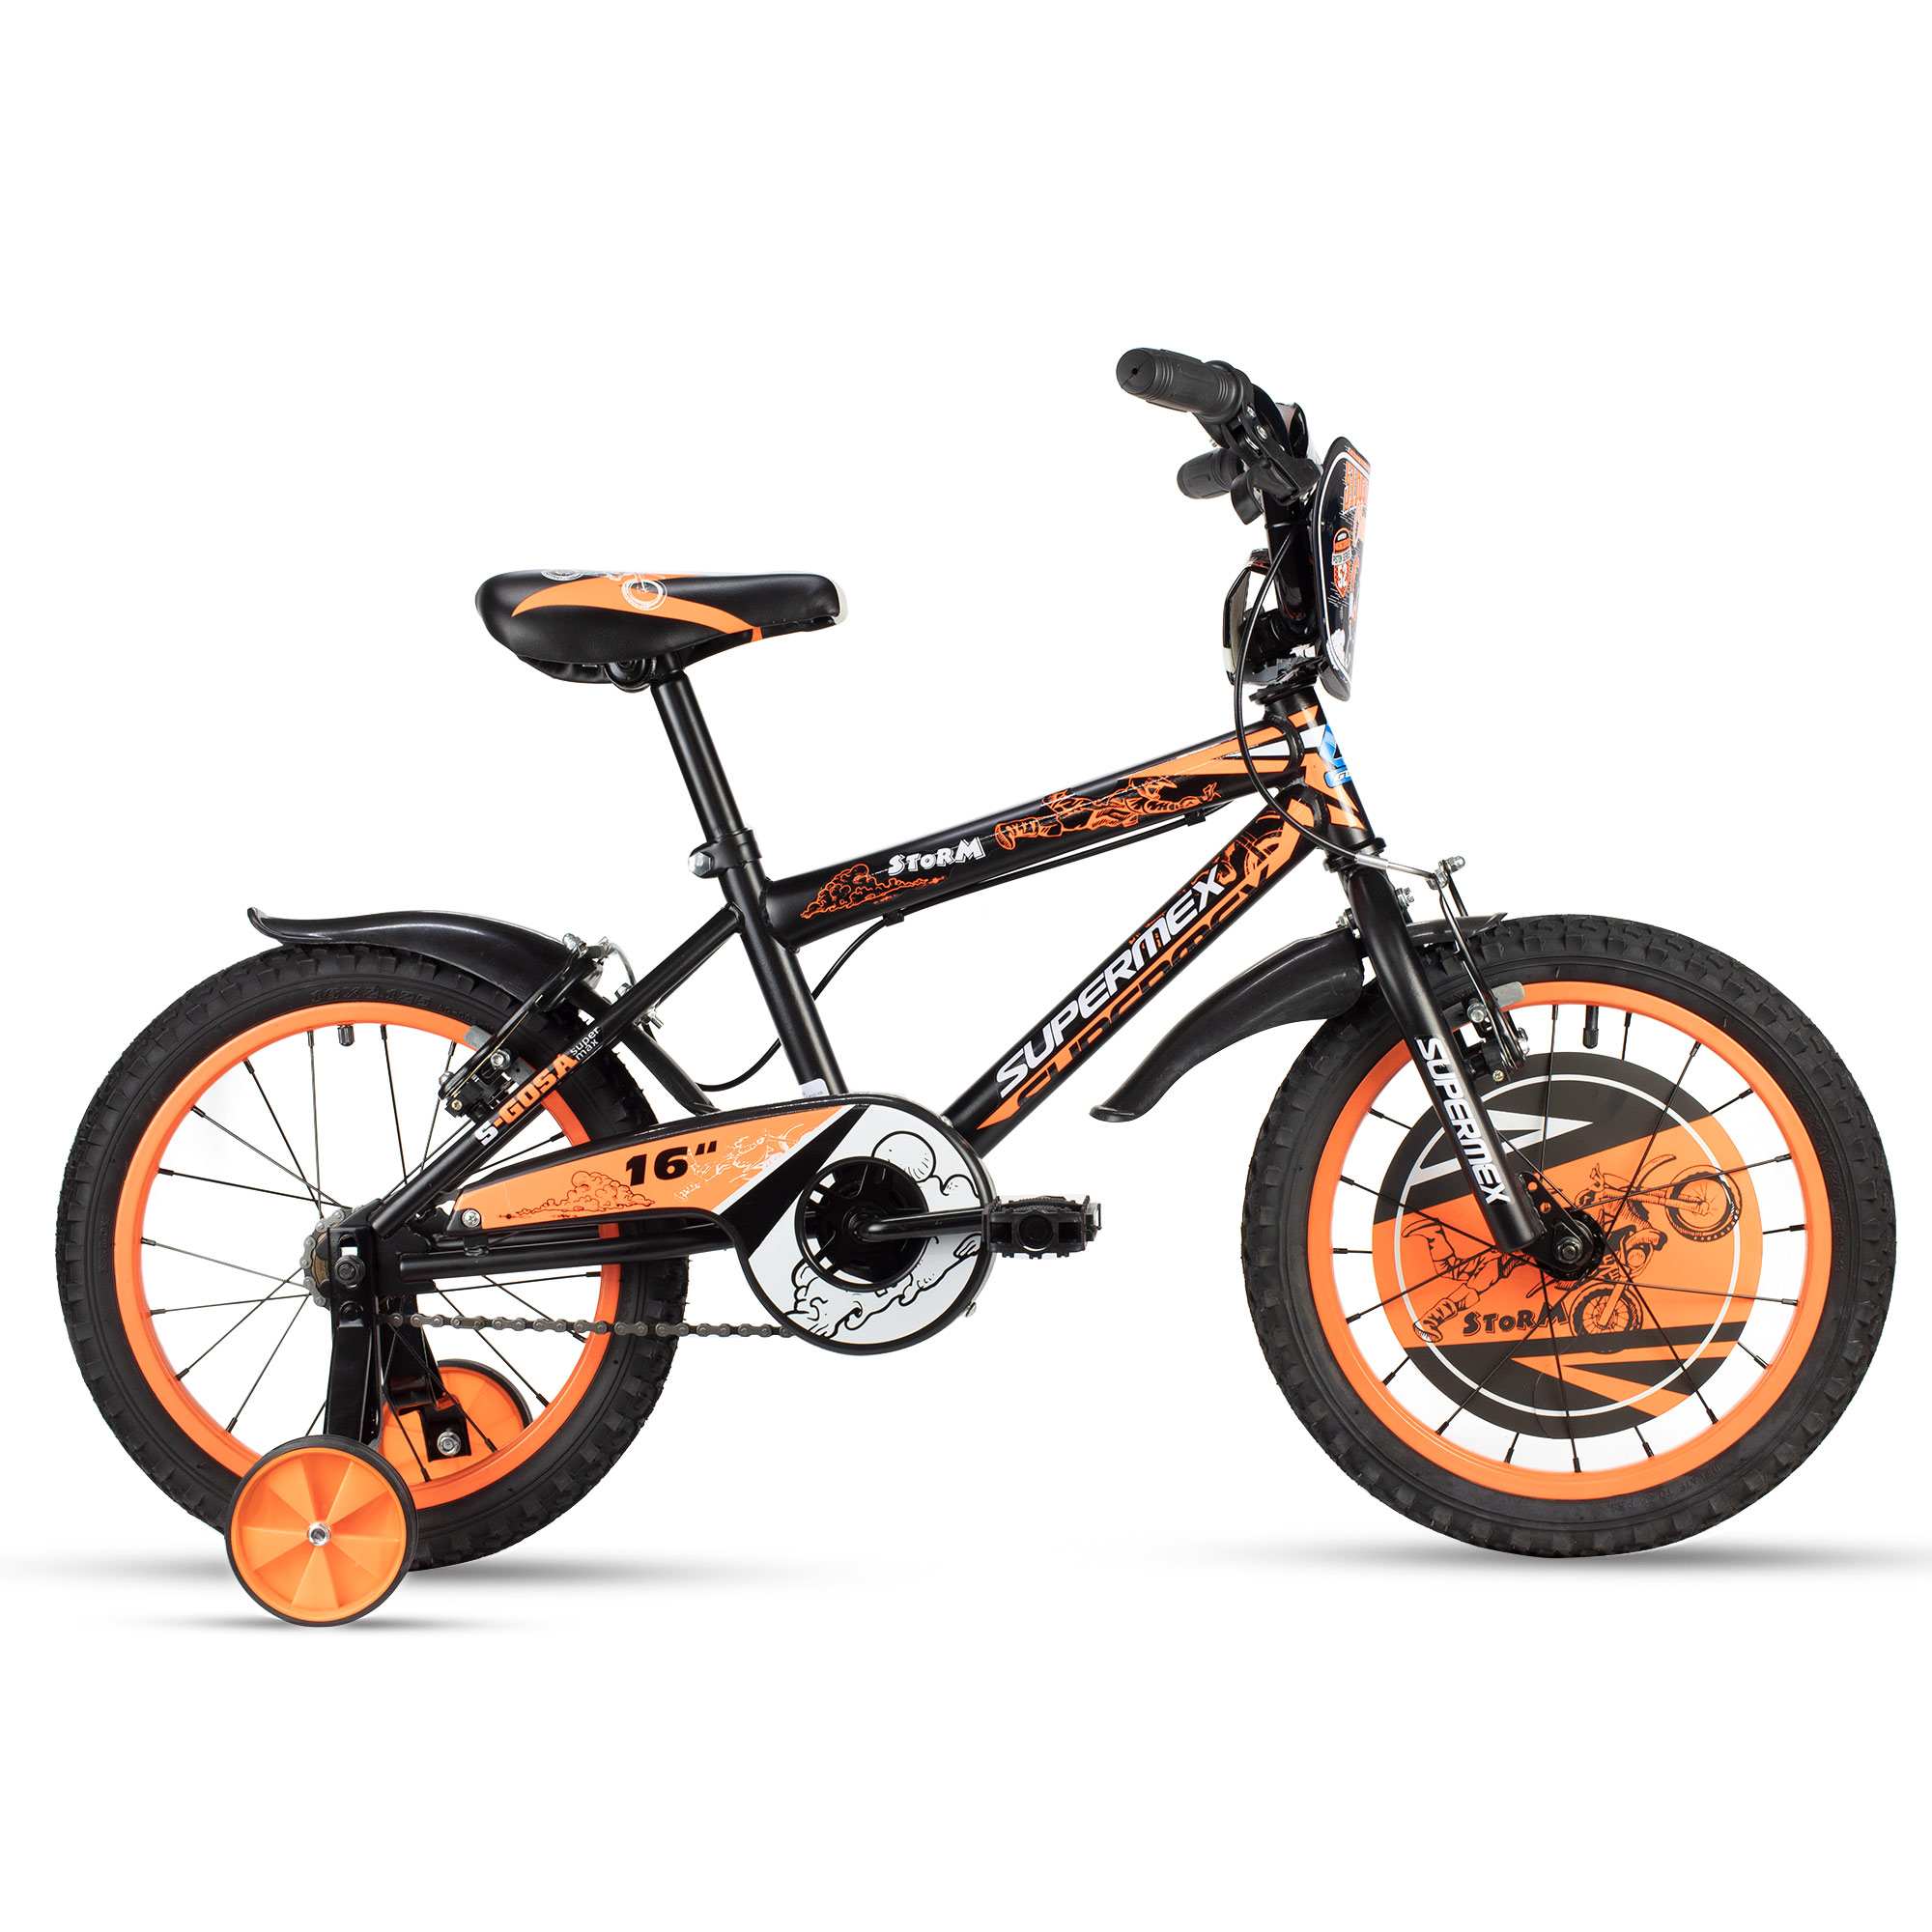 Bicicleta infantil Turbo rodada 16 para niña